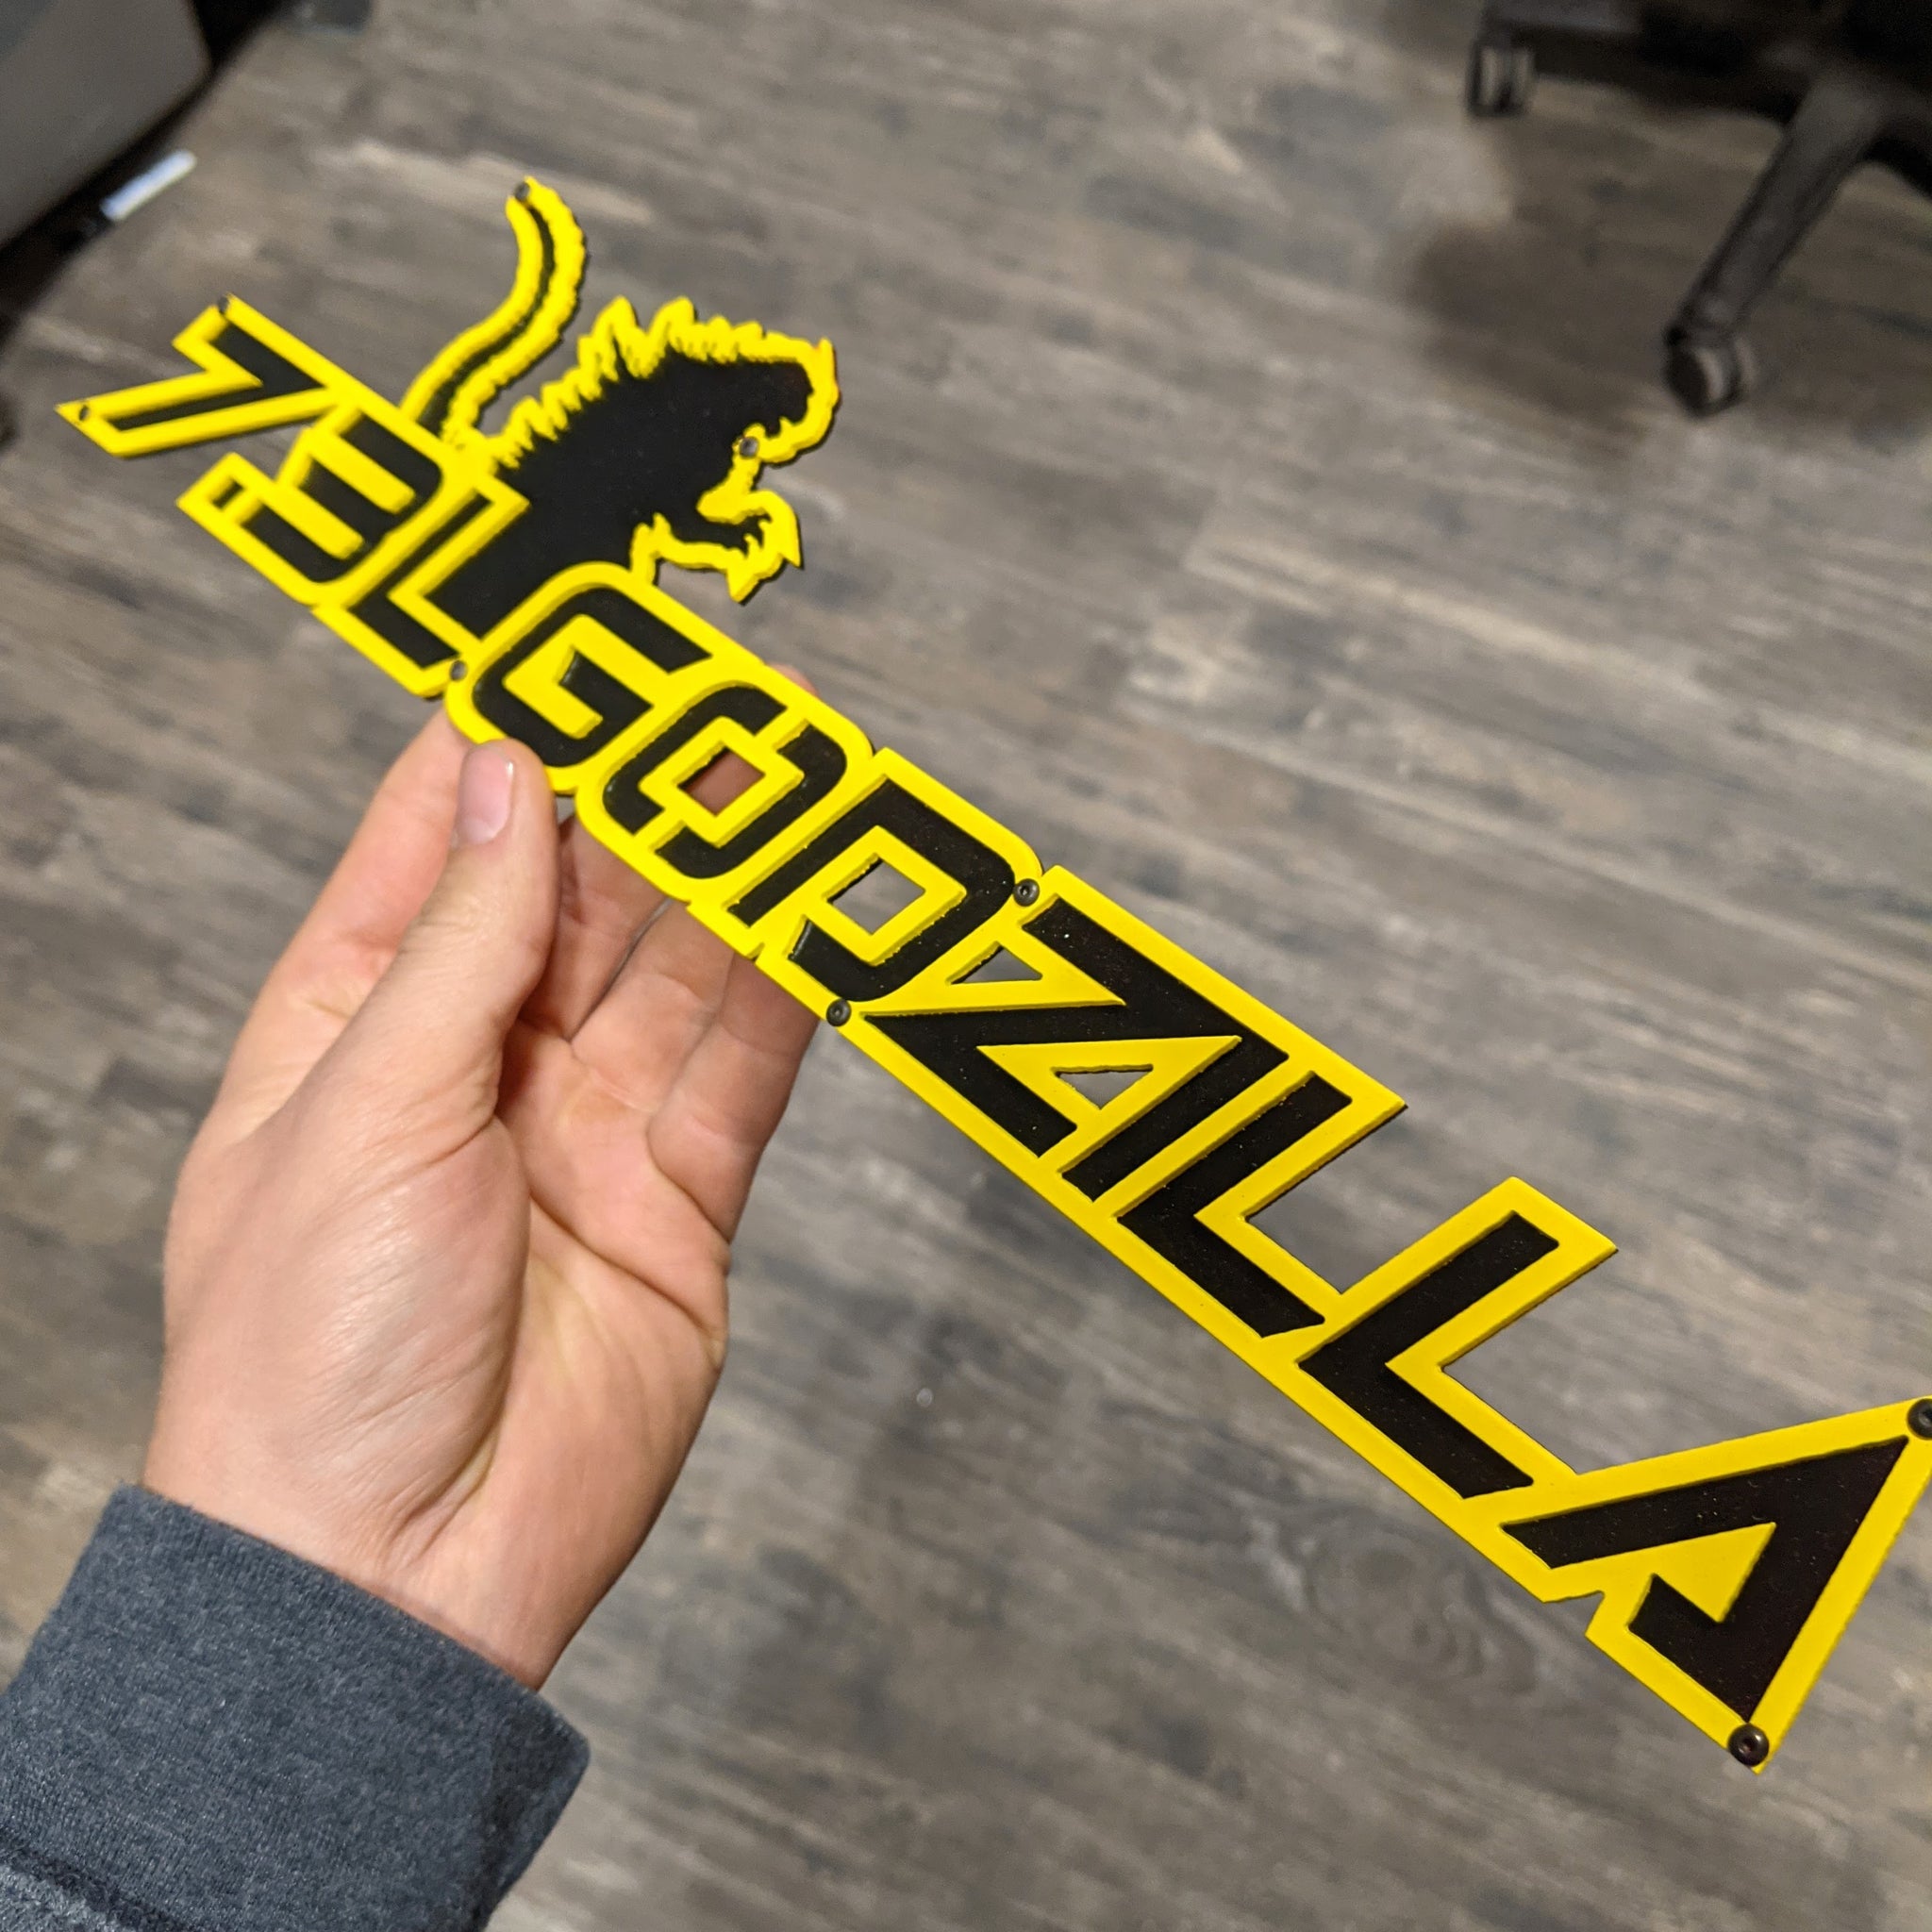 7.3 Godzilla Emblem - Universal Fitment - Right Facing Godzilla - Choose your Colors